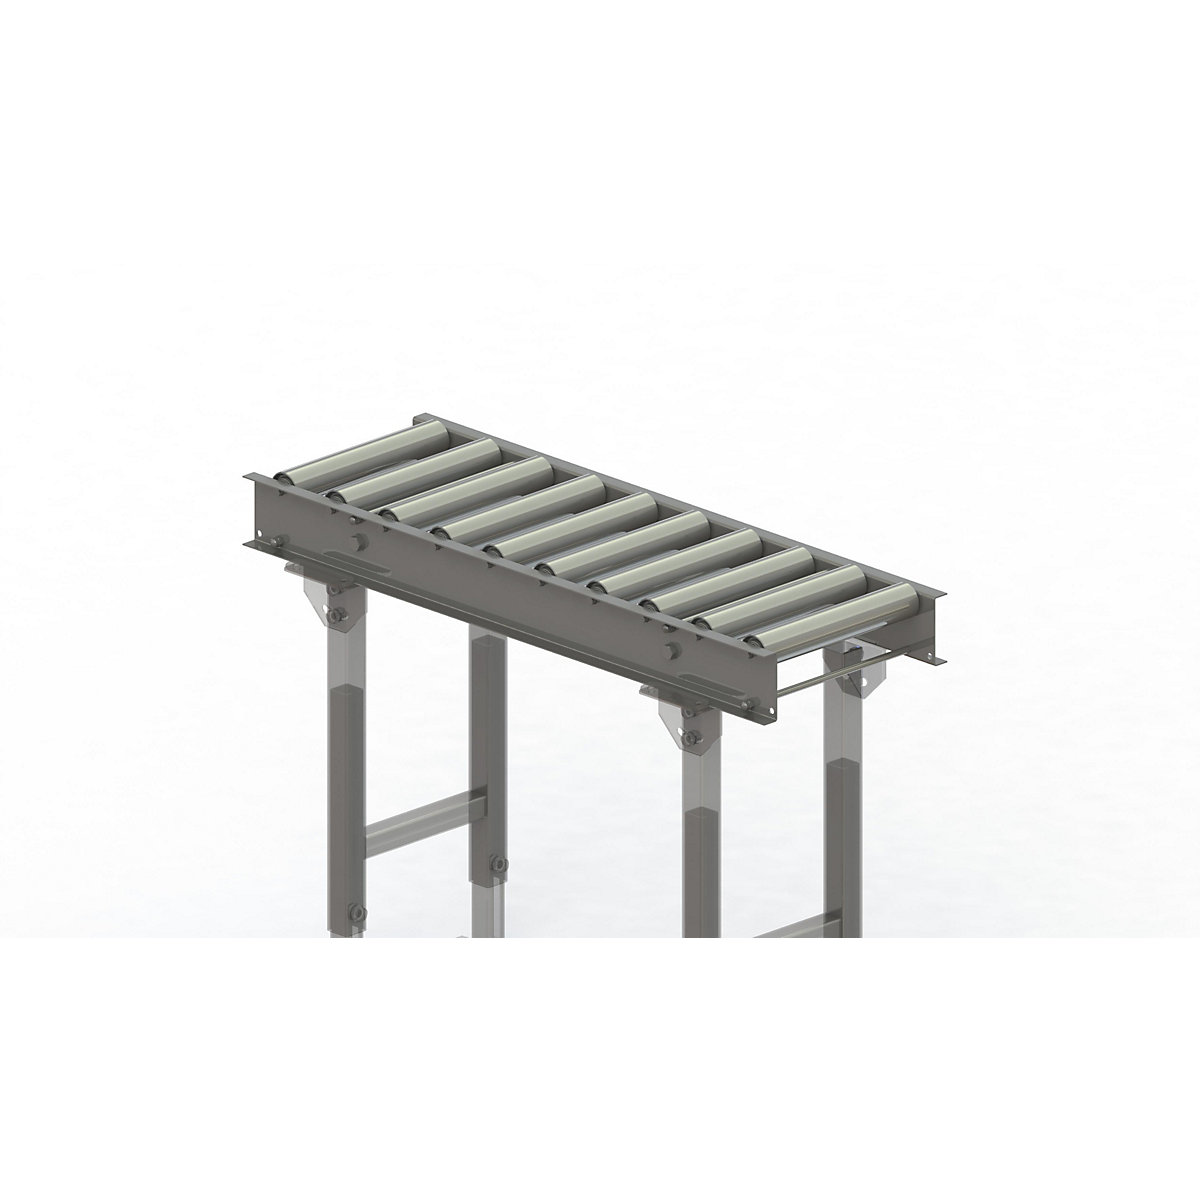 Gura – Roller conveyor, steel frame with zinc plated steel rollers